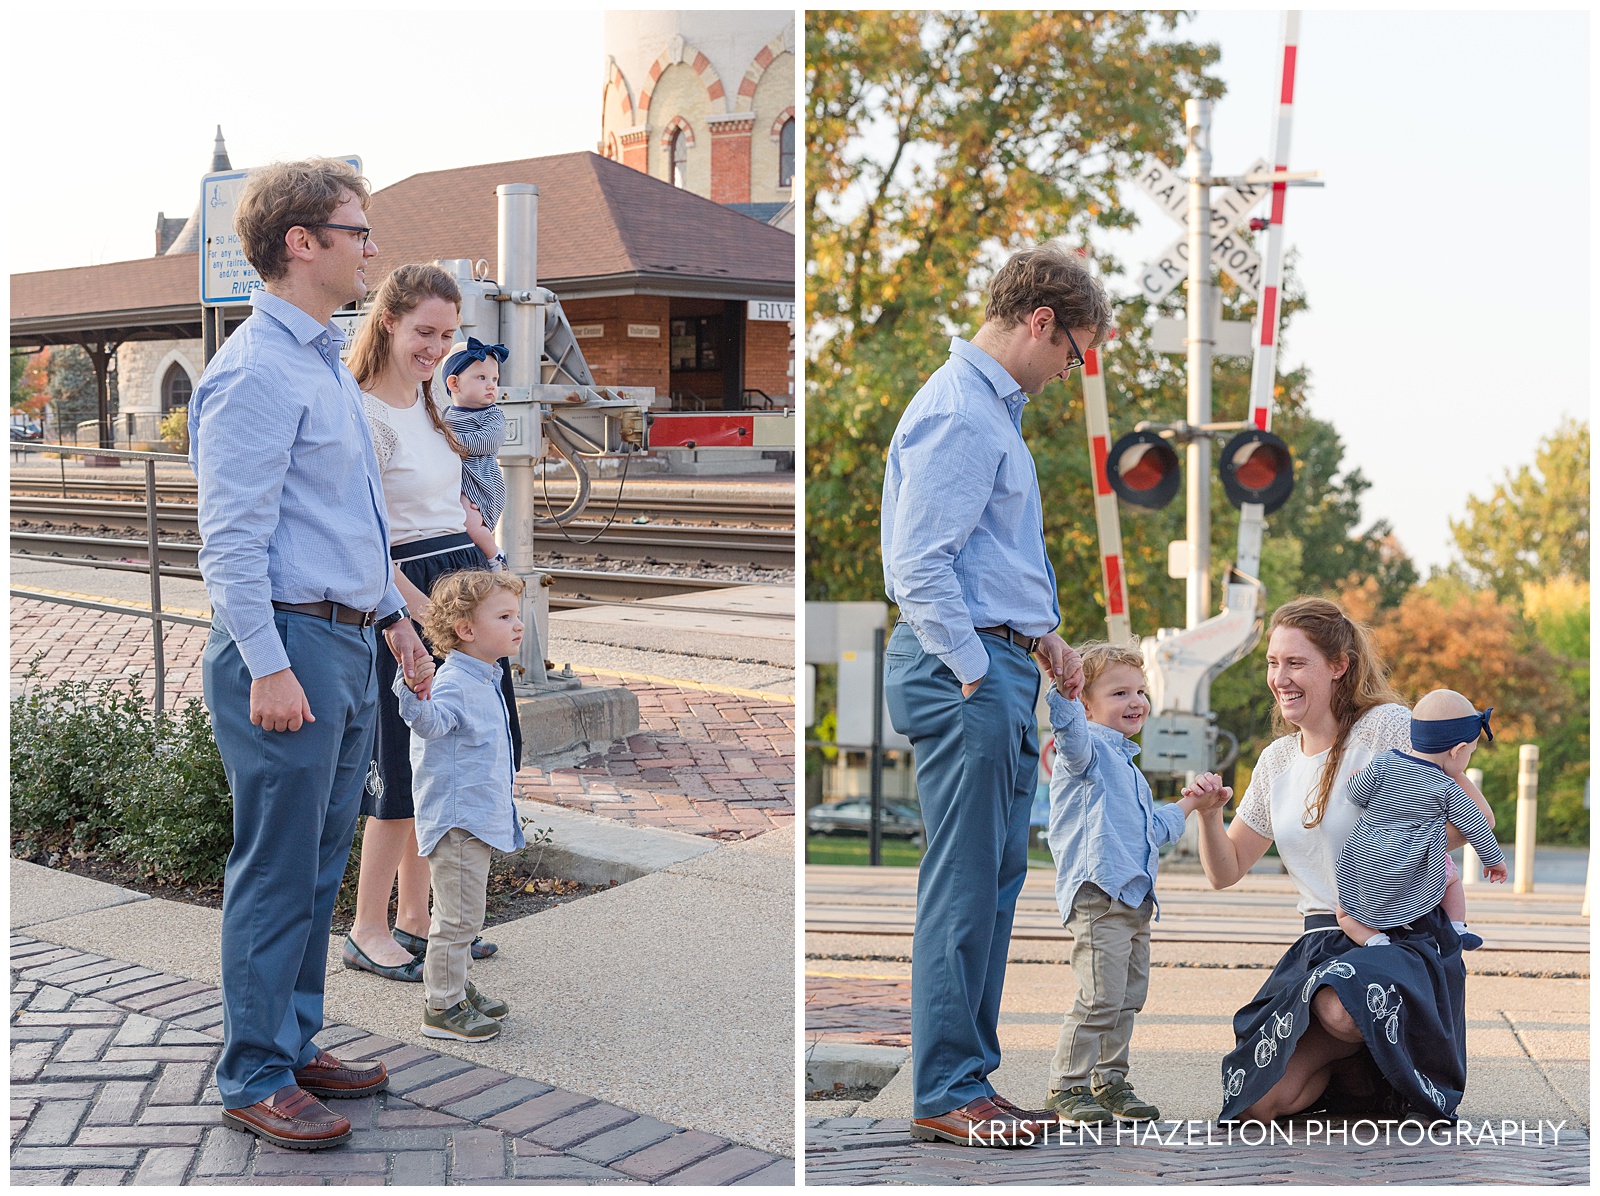 Train family portraits at Riverside, IL by Oak Park photographer Kristen Hazelton